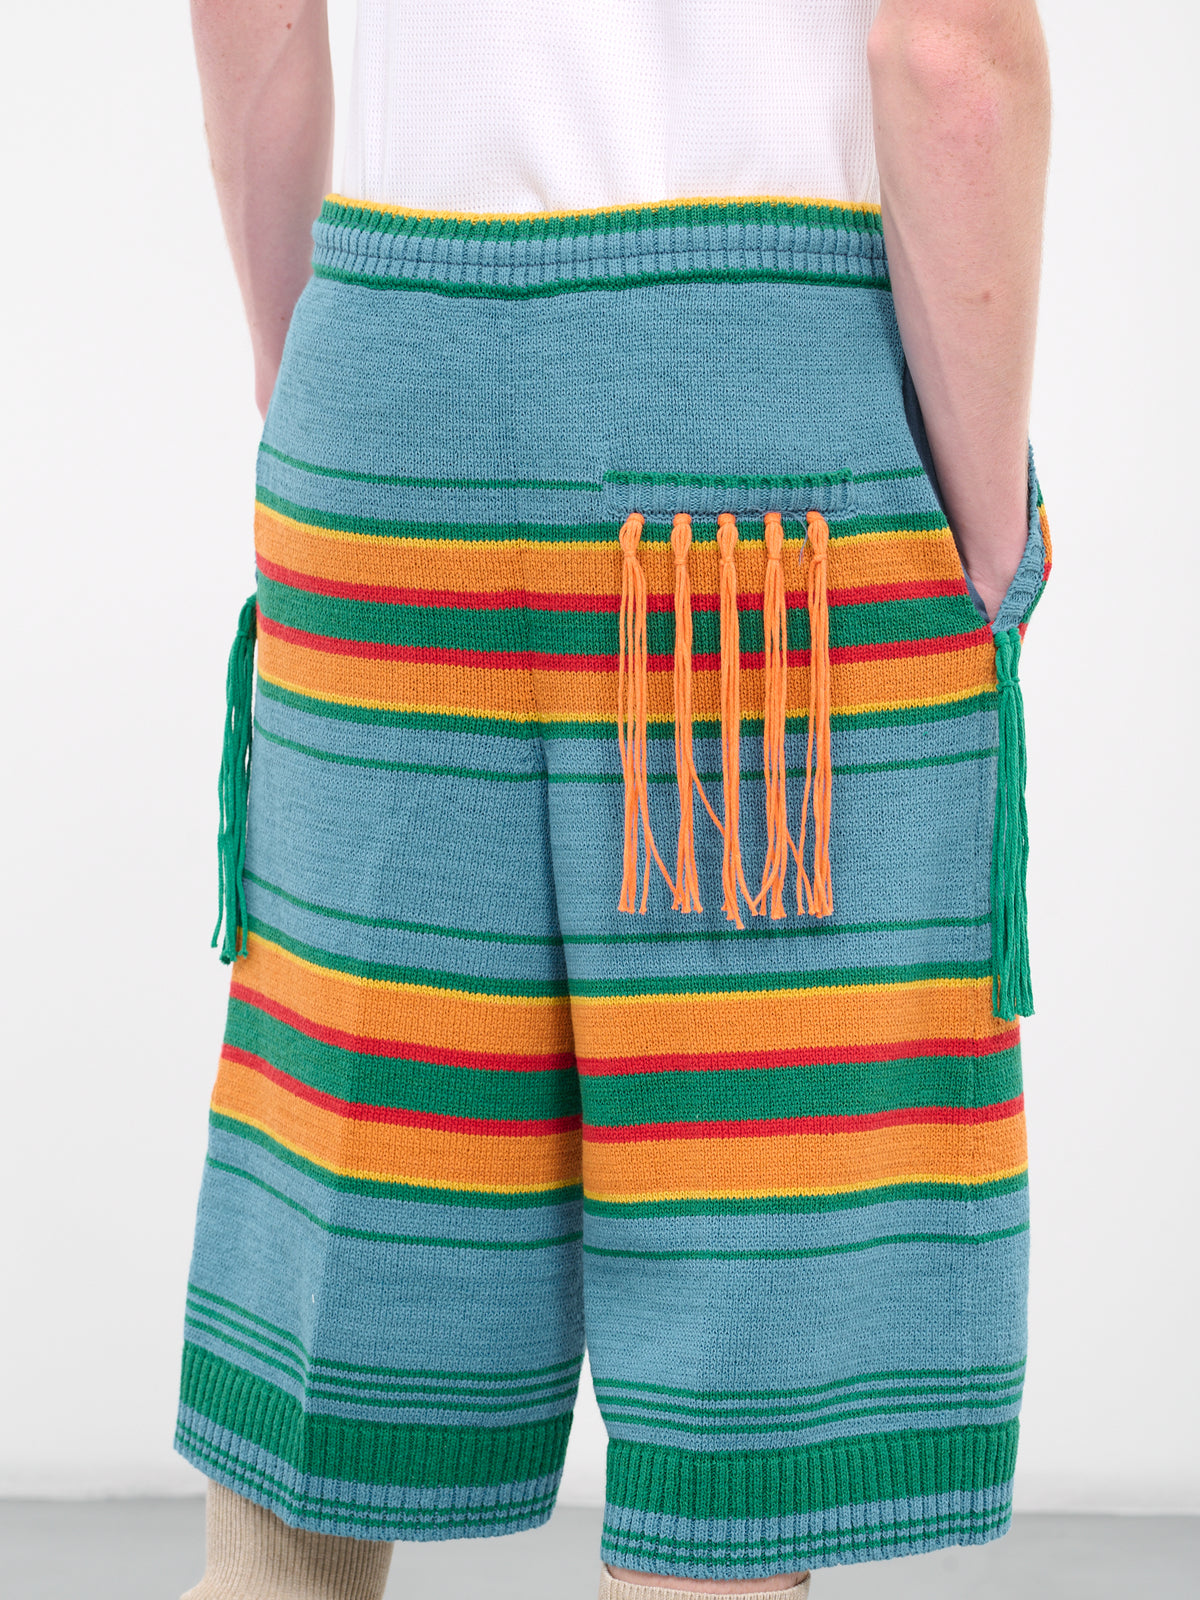 Stripe Shorts (CKNTRP01-BLUE-MULTI-STRIPE)